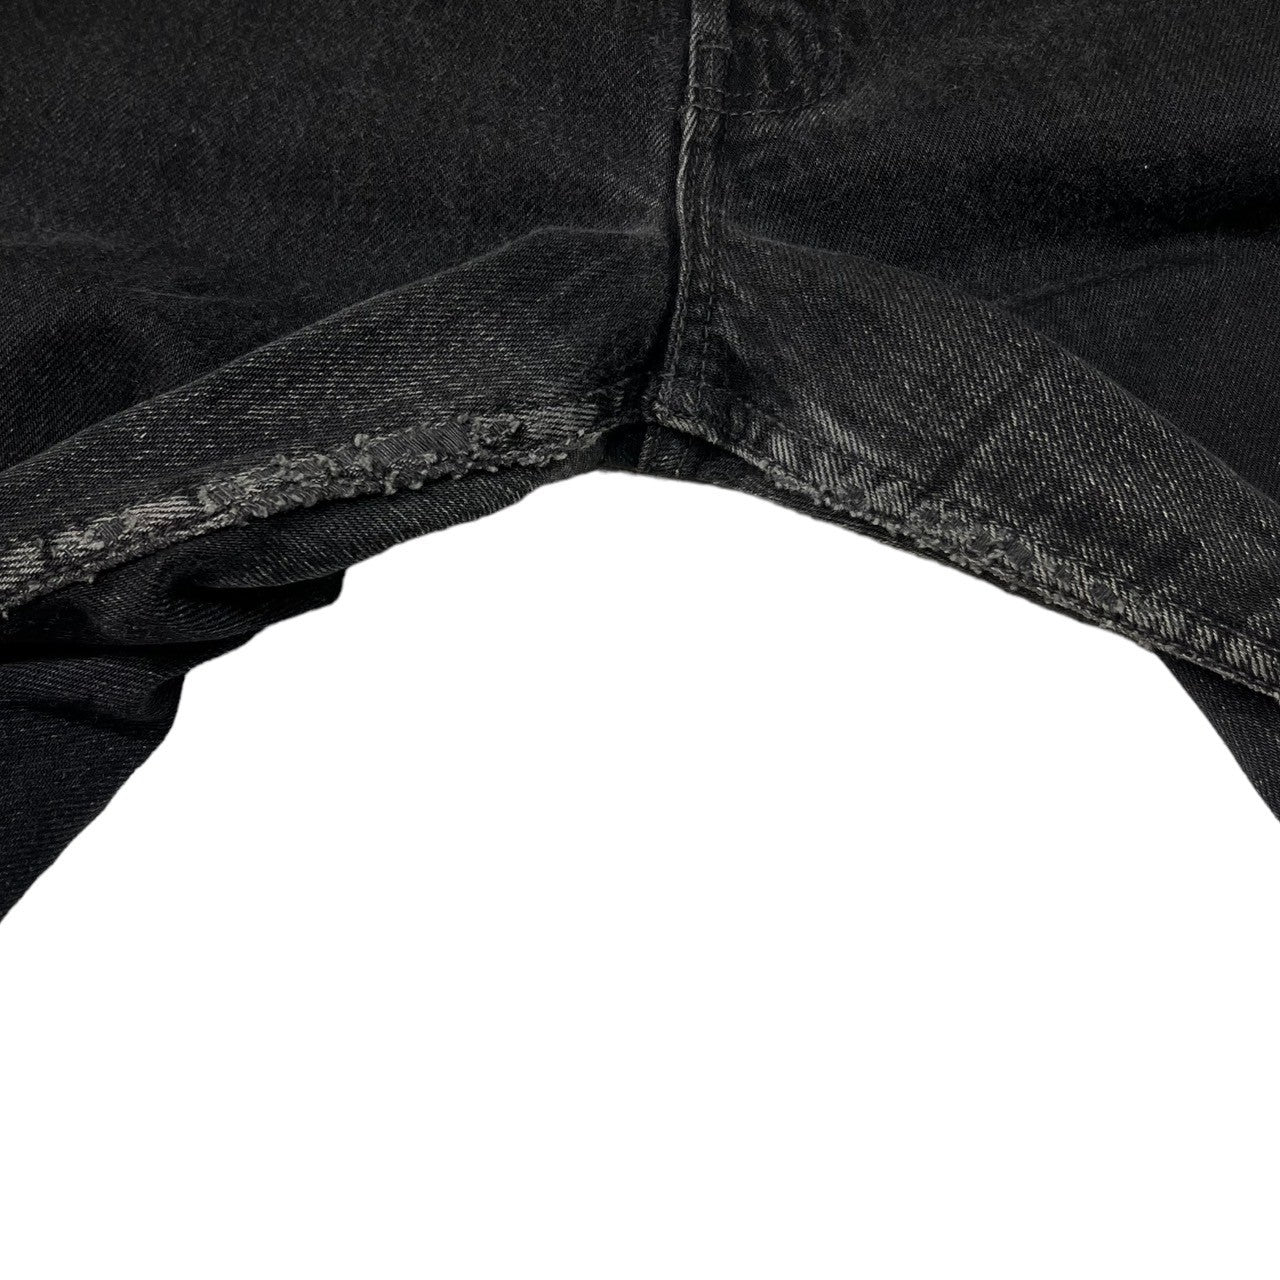 Levi's(リーバイス) 90's 501 black denim pants ブラック デニム パンツ ジーンズ 501-0185 W33 ブラック 裏ボタン273 ポーランド製 Euro Levi's ヨーロッパ